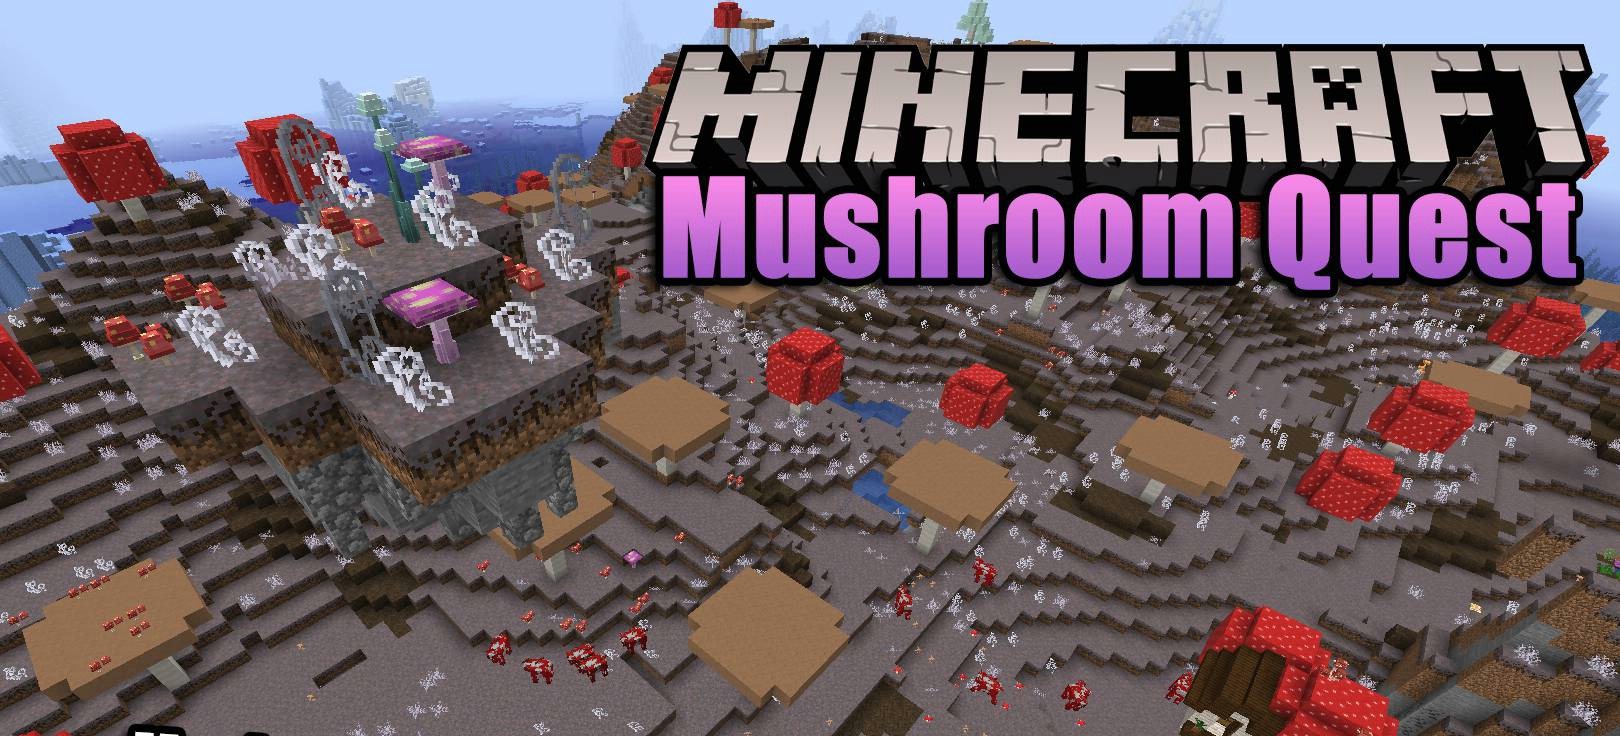 Mushroom Quest screenshot 1